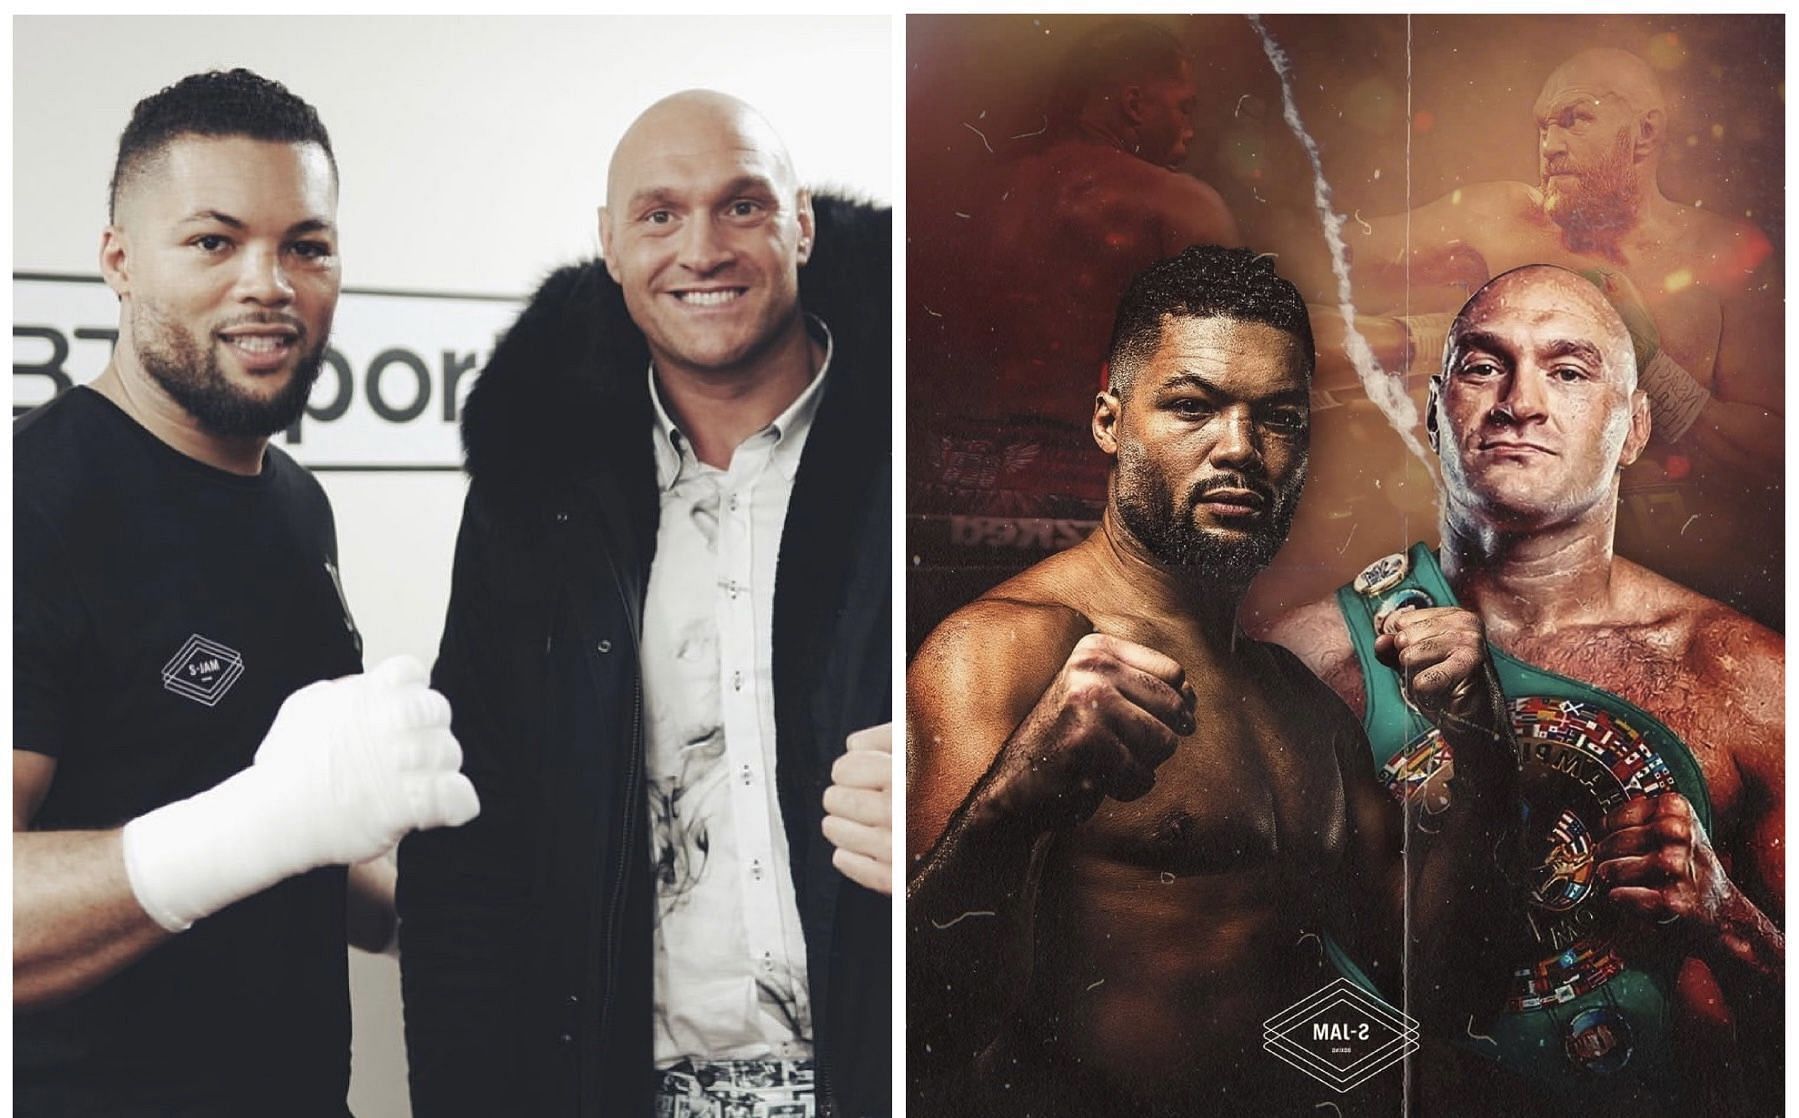 Joe Joyce (left), Tyson Fury (right) - Images via @joejoyceboxing on Instagram